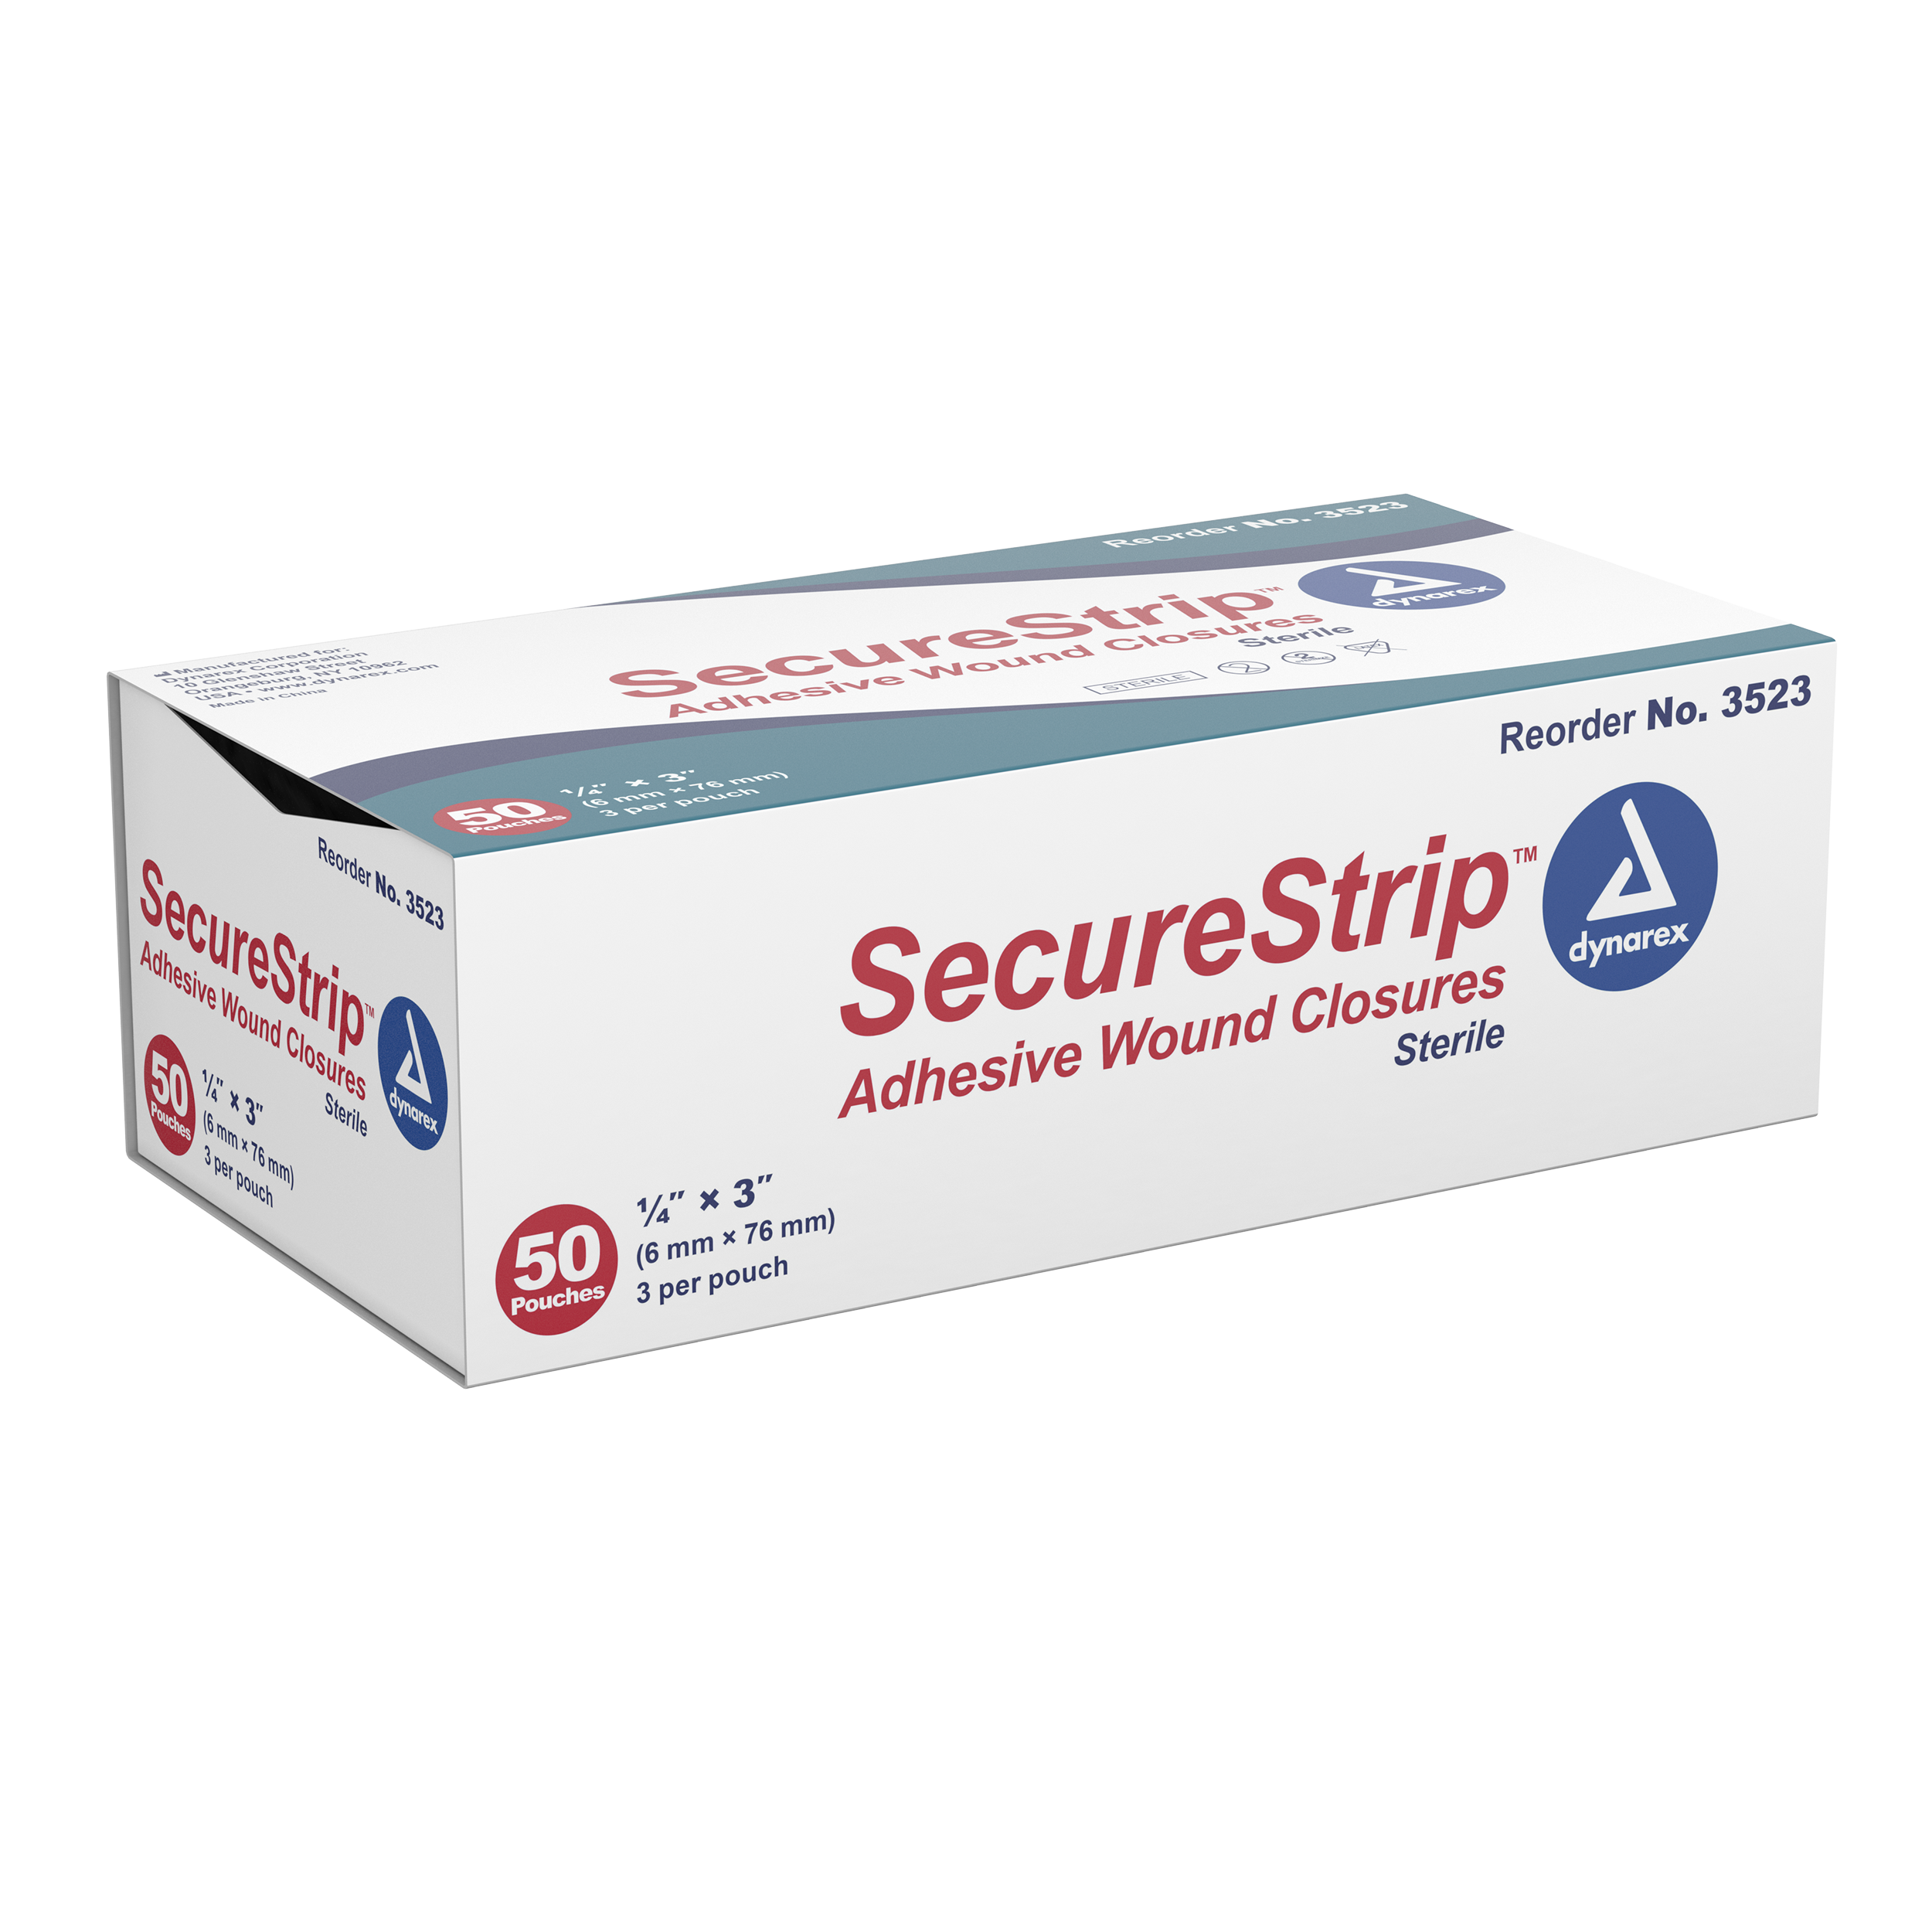 SecureStrip Adhesive Wound Closures - Sterile, 1/4" x 3", 